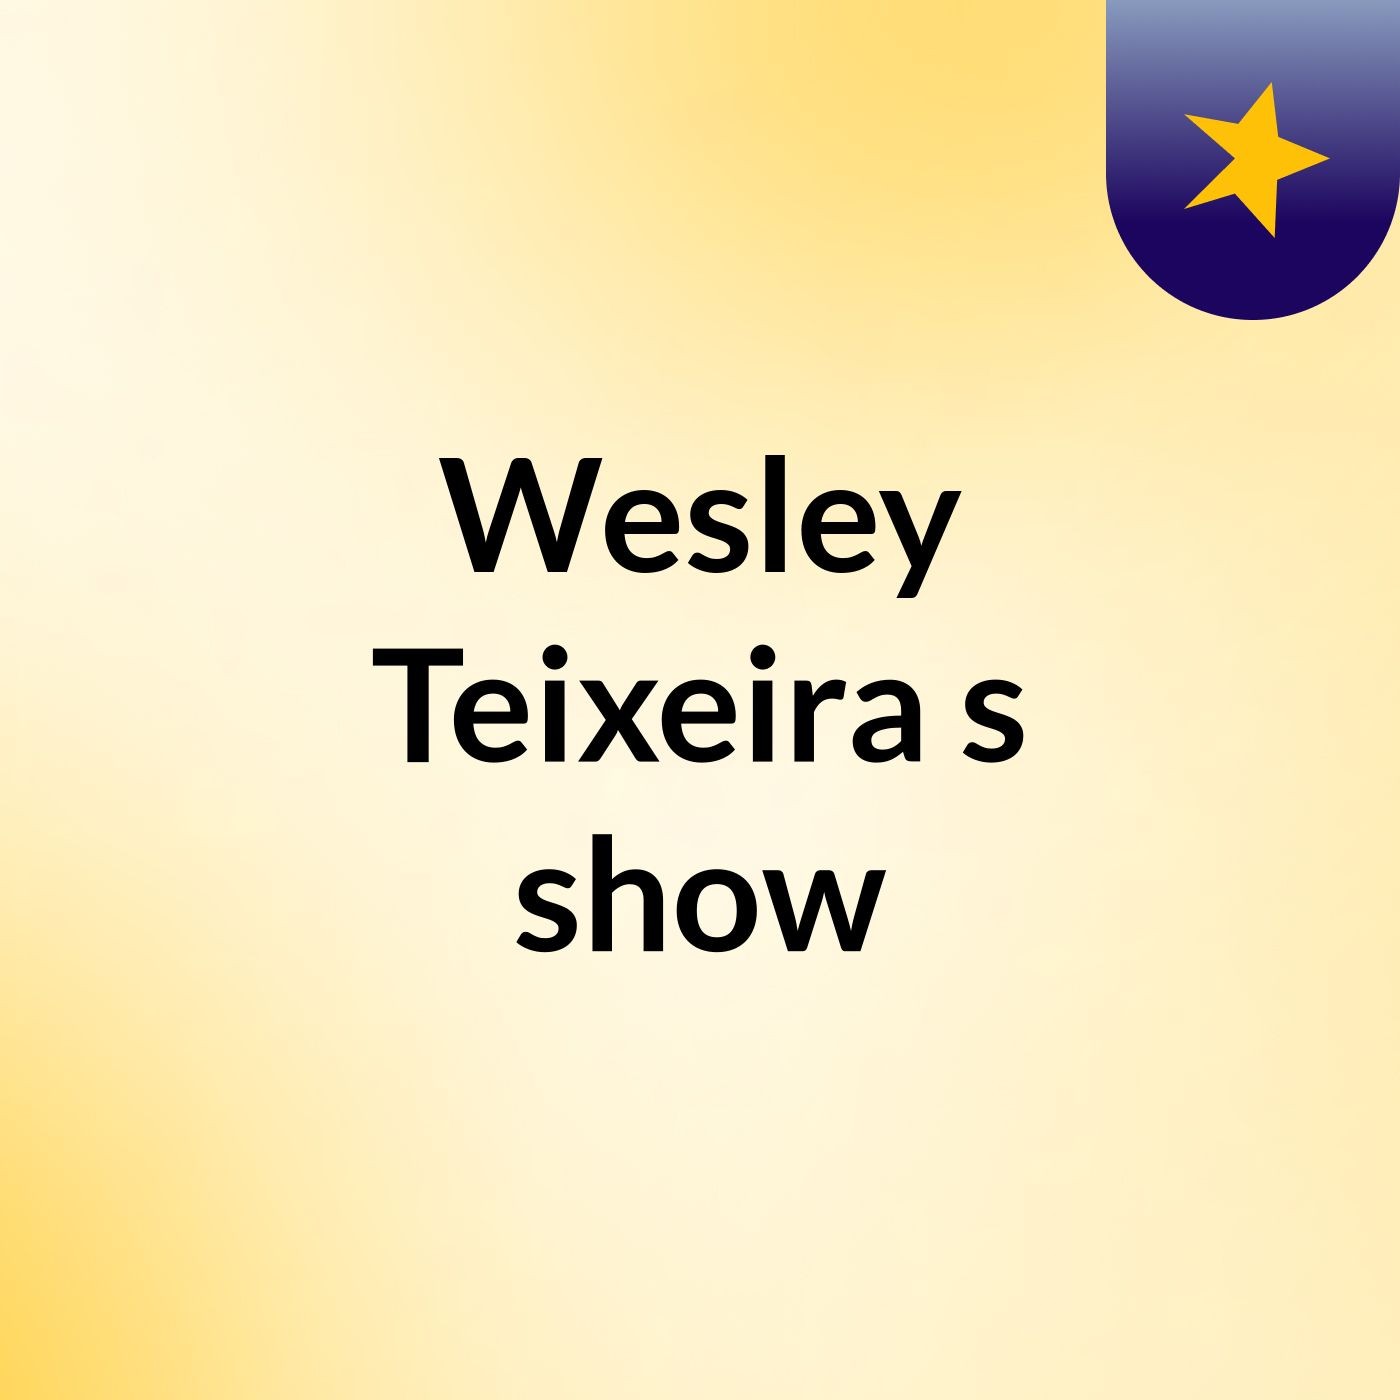 Wesley Teixeira's show